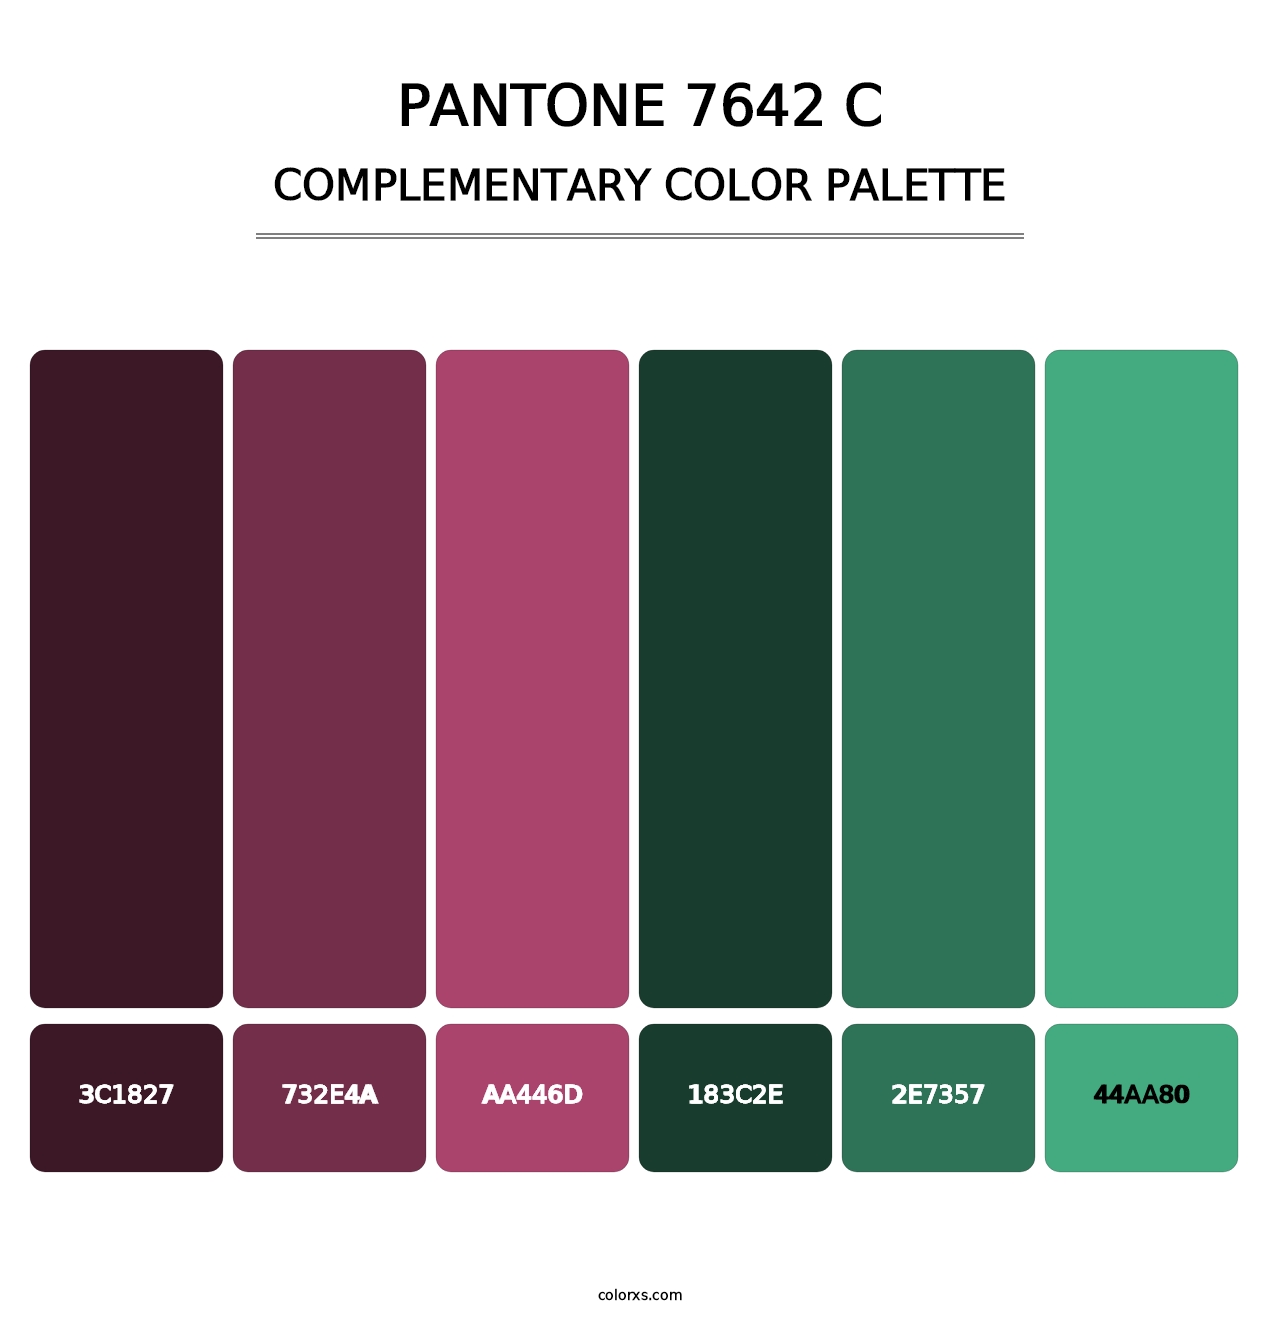 PANTONE 7642 C - Complementary Color Palette